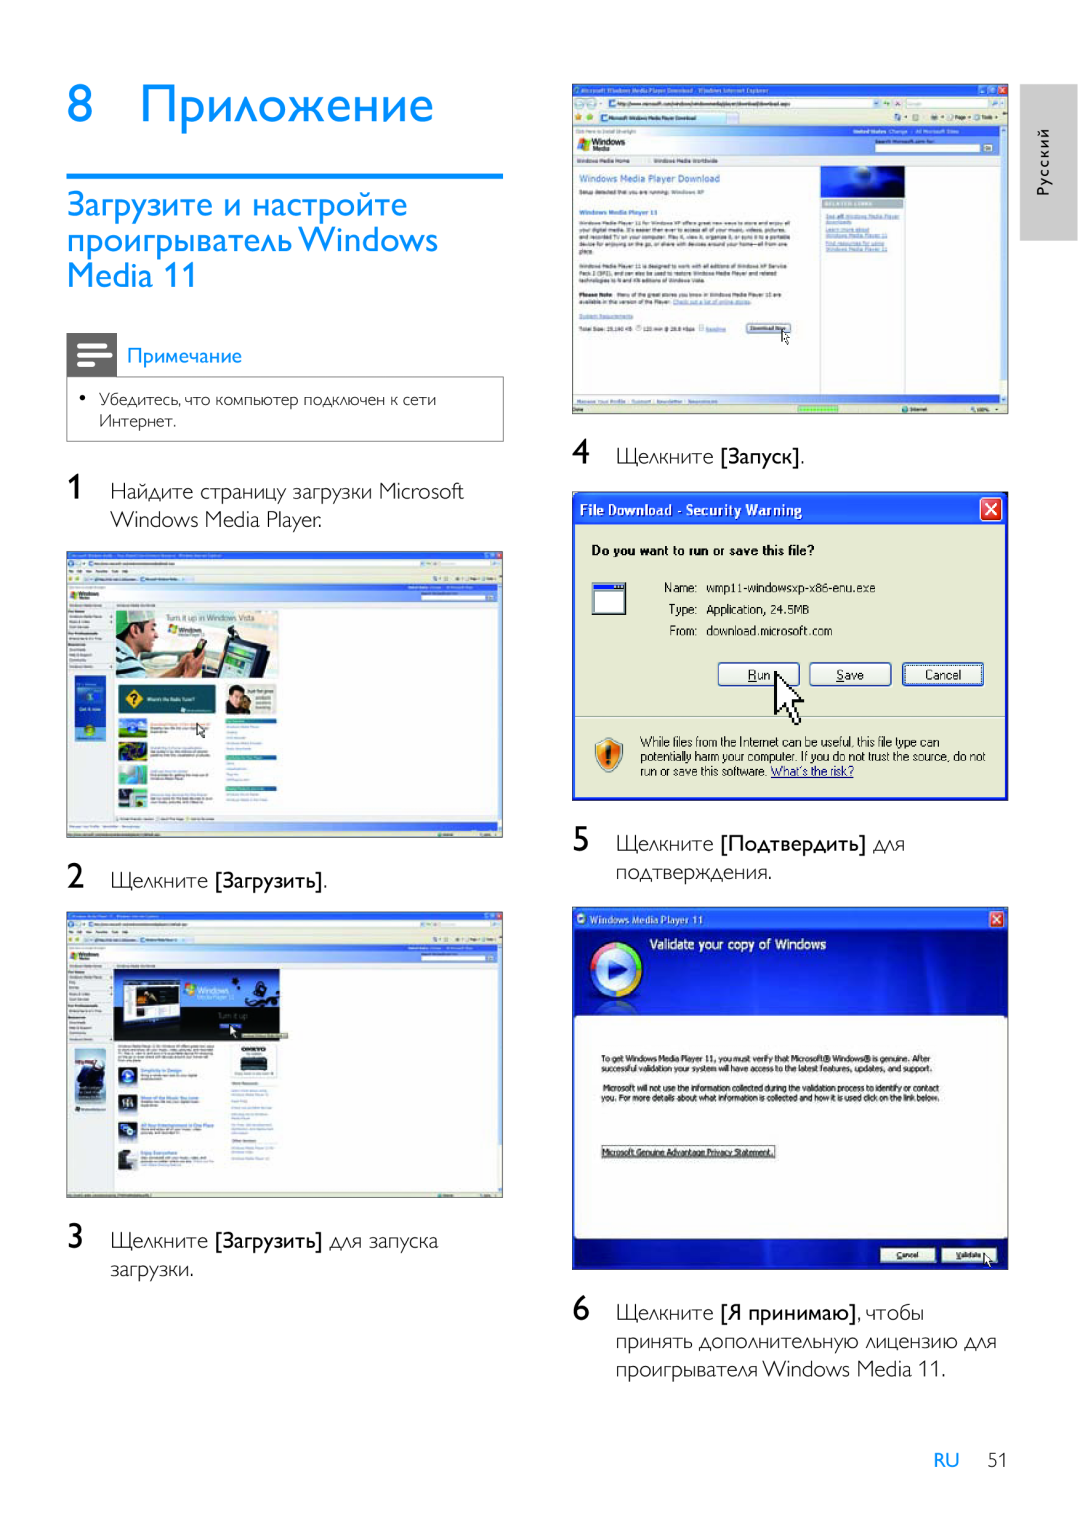 Philips 8FF3WMI 8ǜǽǵǸǻǳǲǺǵǲ, ǔǭǰǽȀǴǵǿǲ ǵ ǺǭǾǿǽǻǶǿǲ ǼǽǻǵǰǽȈǯǭǿǲǸȉ Windows Media, 4ǦǲǸǷǺǵǿǲ ǔǭǼȀǾǷ, 2 ǦǲǸǷǺǵǿǲ ǔǭǰǽȀǴǵǿȉ 